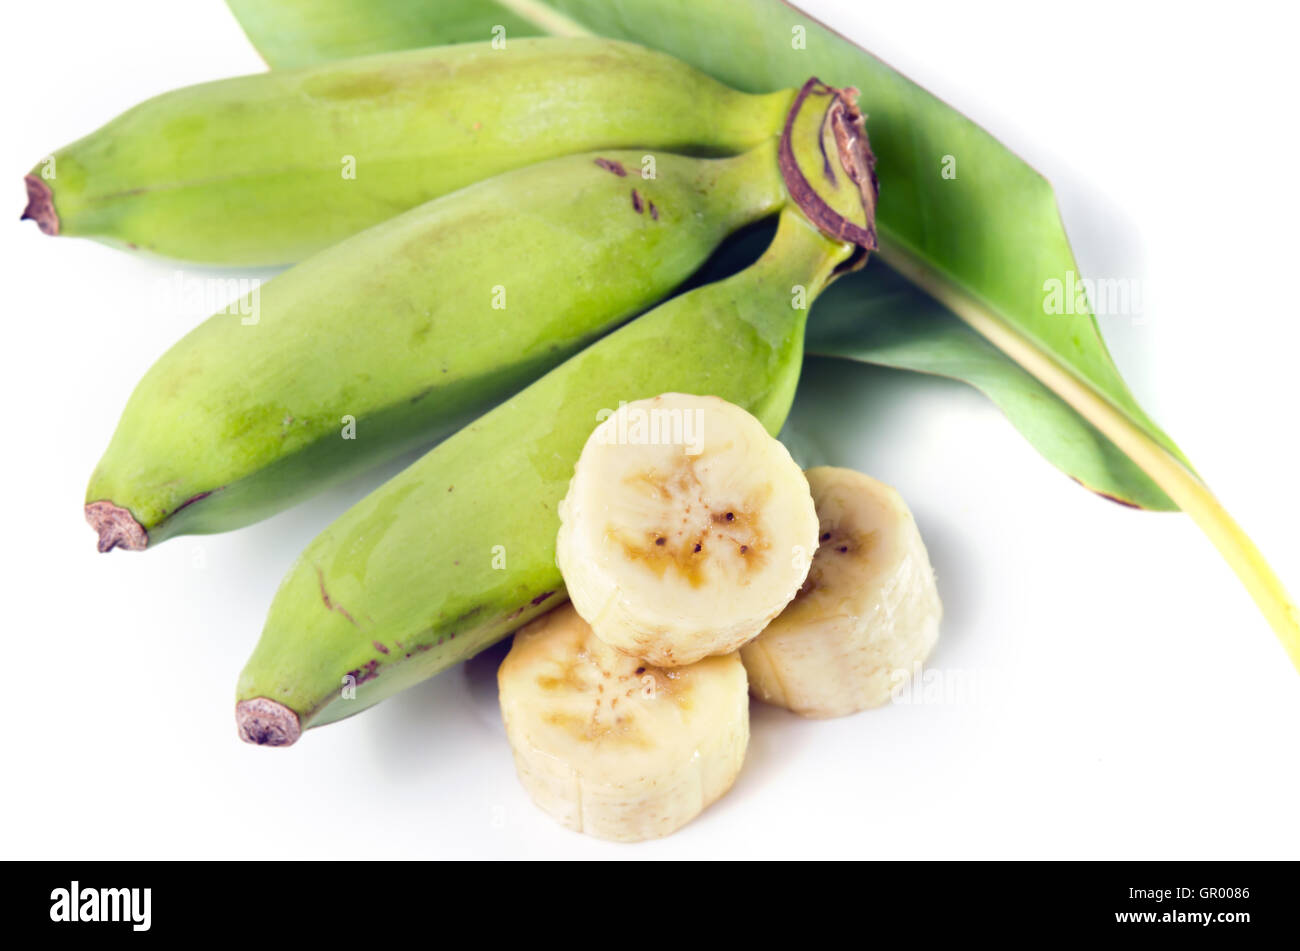 Banana (Other names are Musa banana acuminata, Musa balbisiana, and Musa x paradisiaca) fruit with leaf Stock Photo